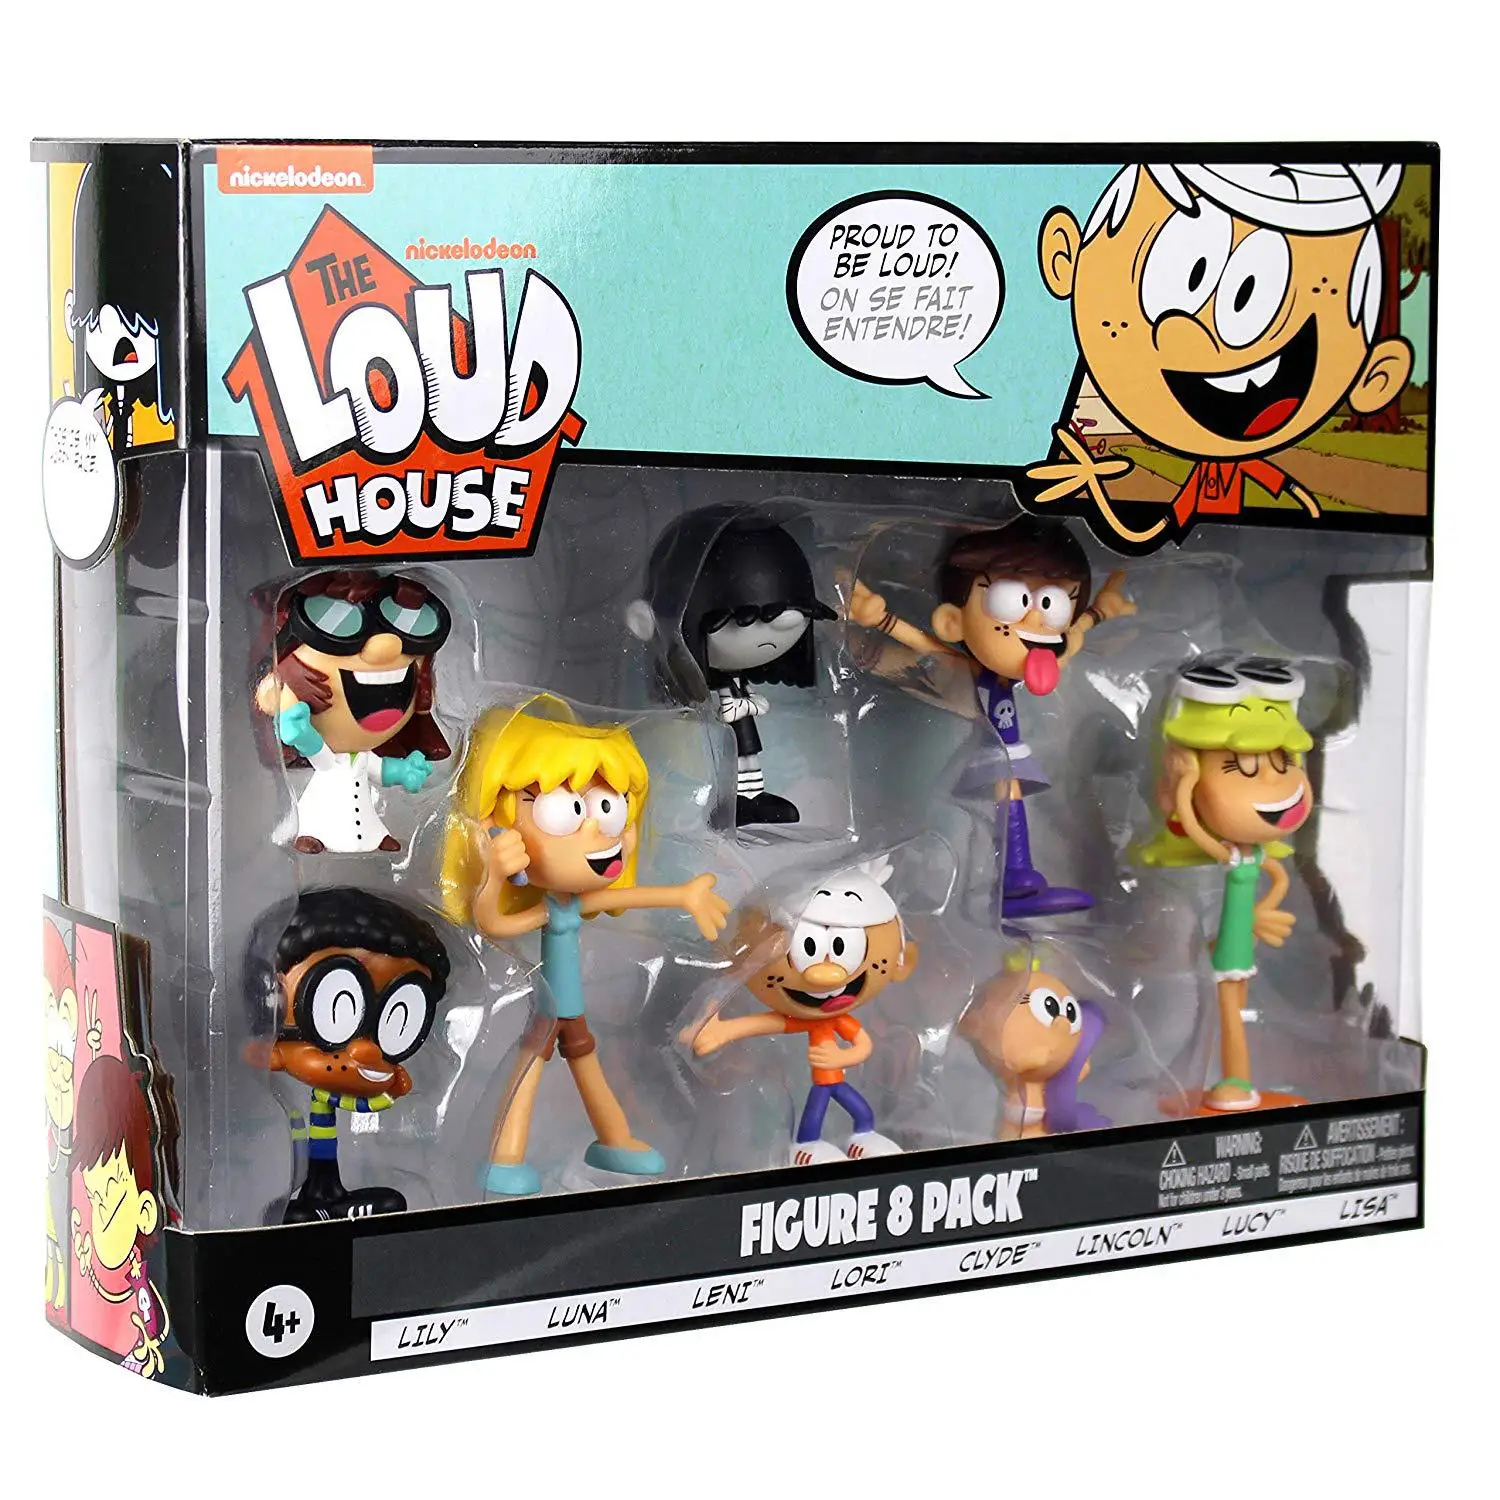 The Loud House фигурка, 8 шт. в упаковке, Линкольн, клэйд, Лори, лилия, лени, Lucy Lisa Luna, фигурка, игрушки для детей, подарки